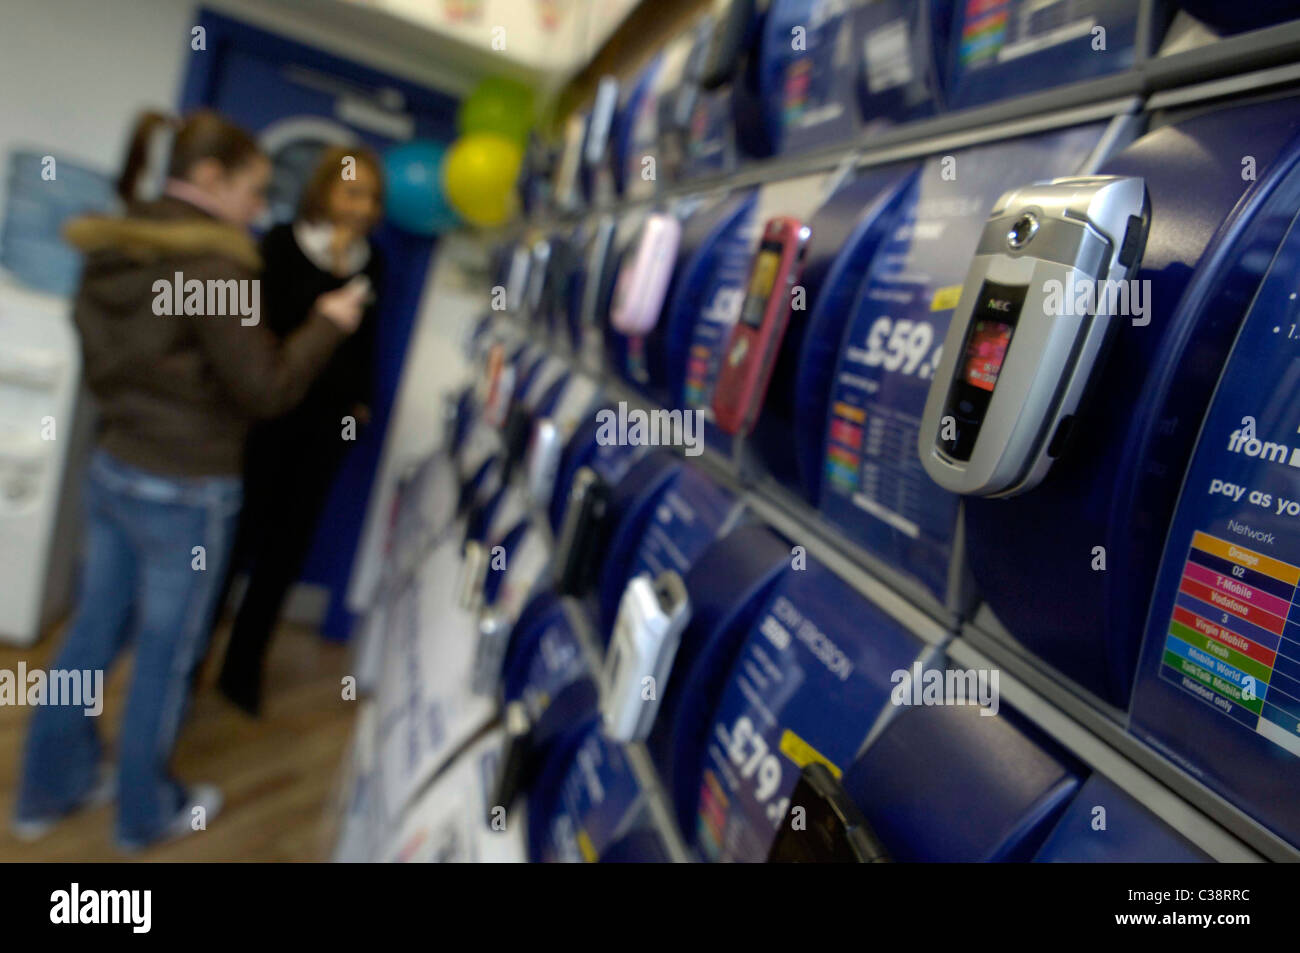 A Carphone Warehouse employee advising a customer inside a store. Stock Photo